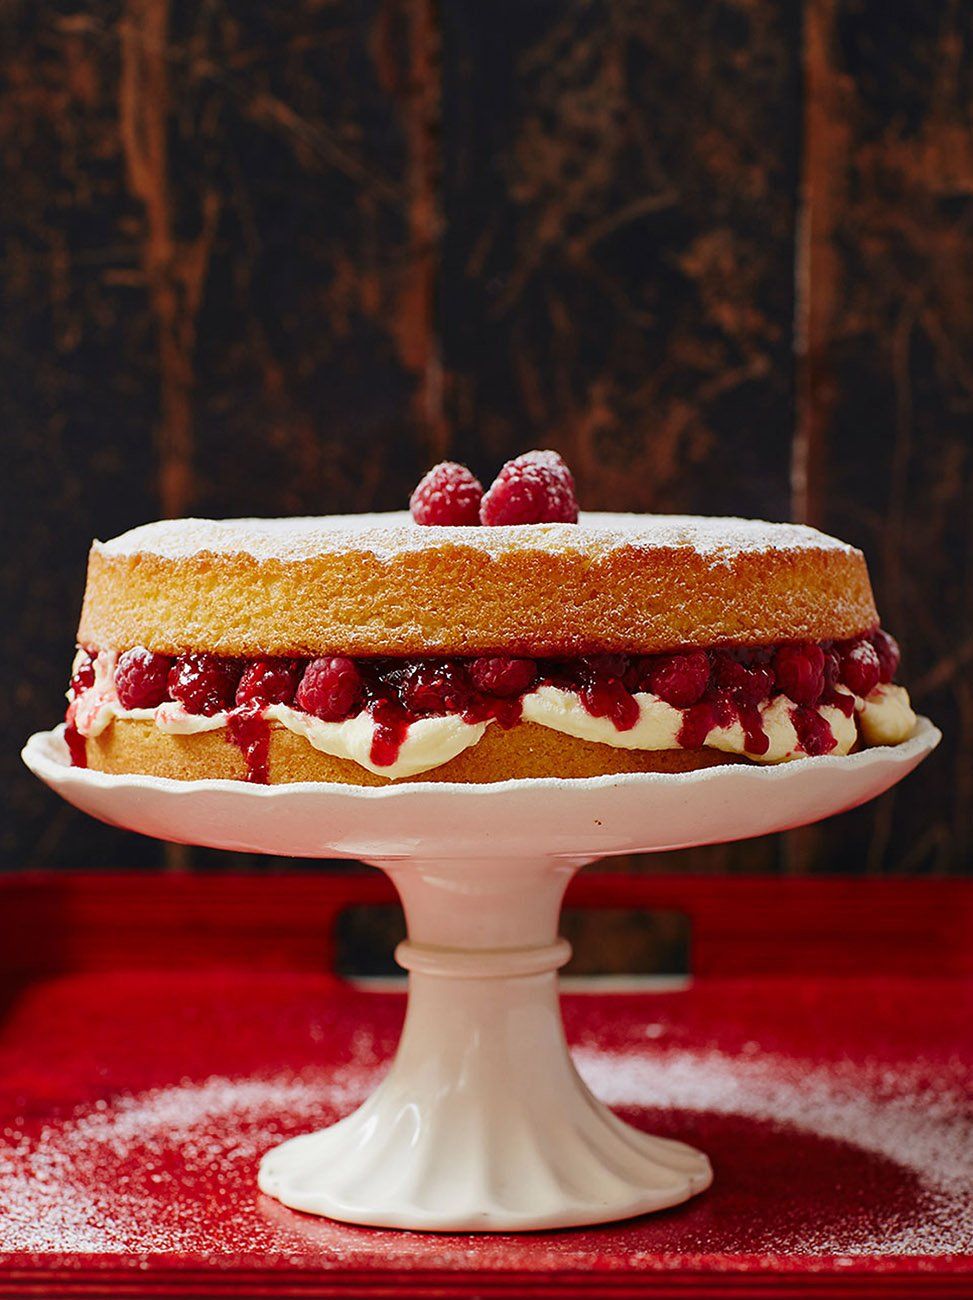 Victoria sponge cake, the British tea classic recipe - Spatula Desserts